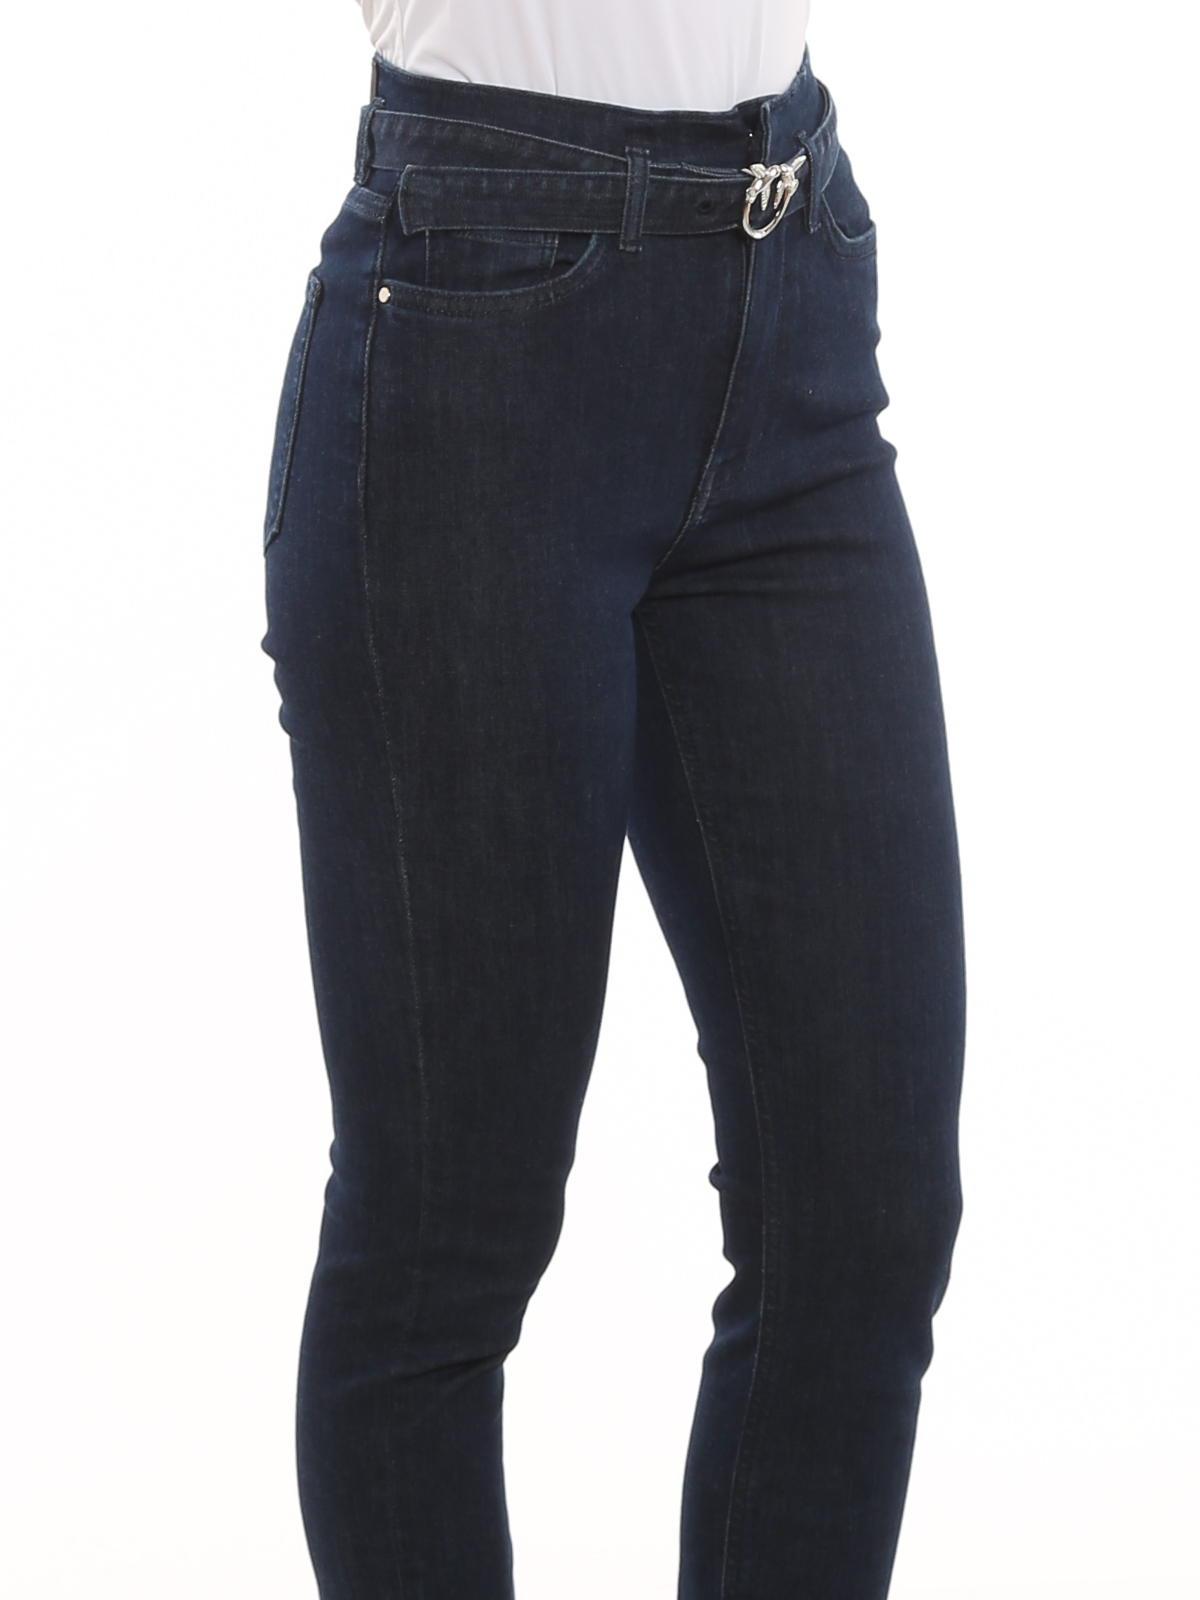 Skinny jeans Pinko - Susan 20 jeans - 1J10P0Y78RF92 | Shop online at iKRIX